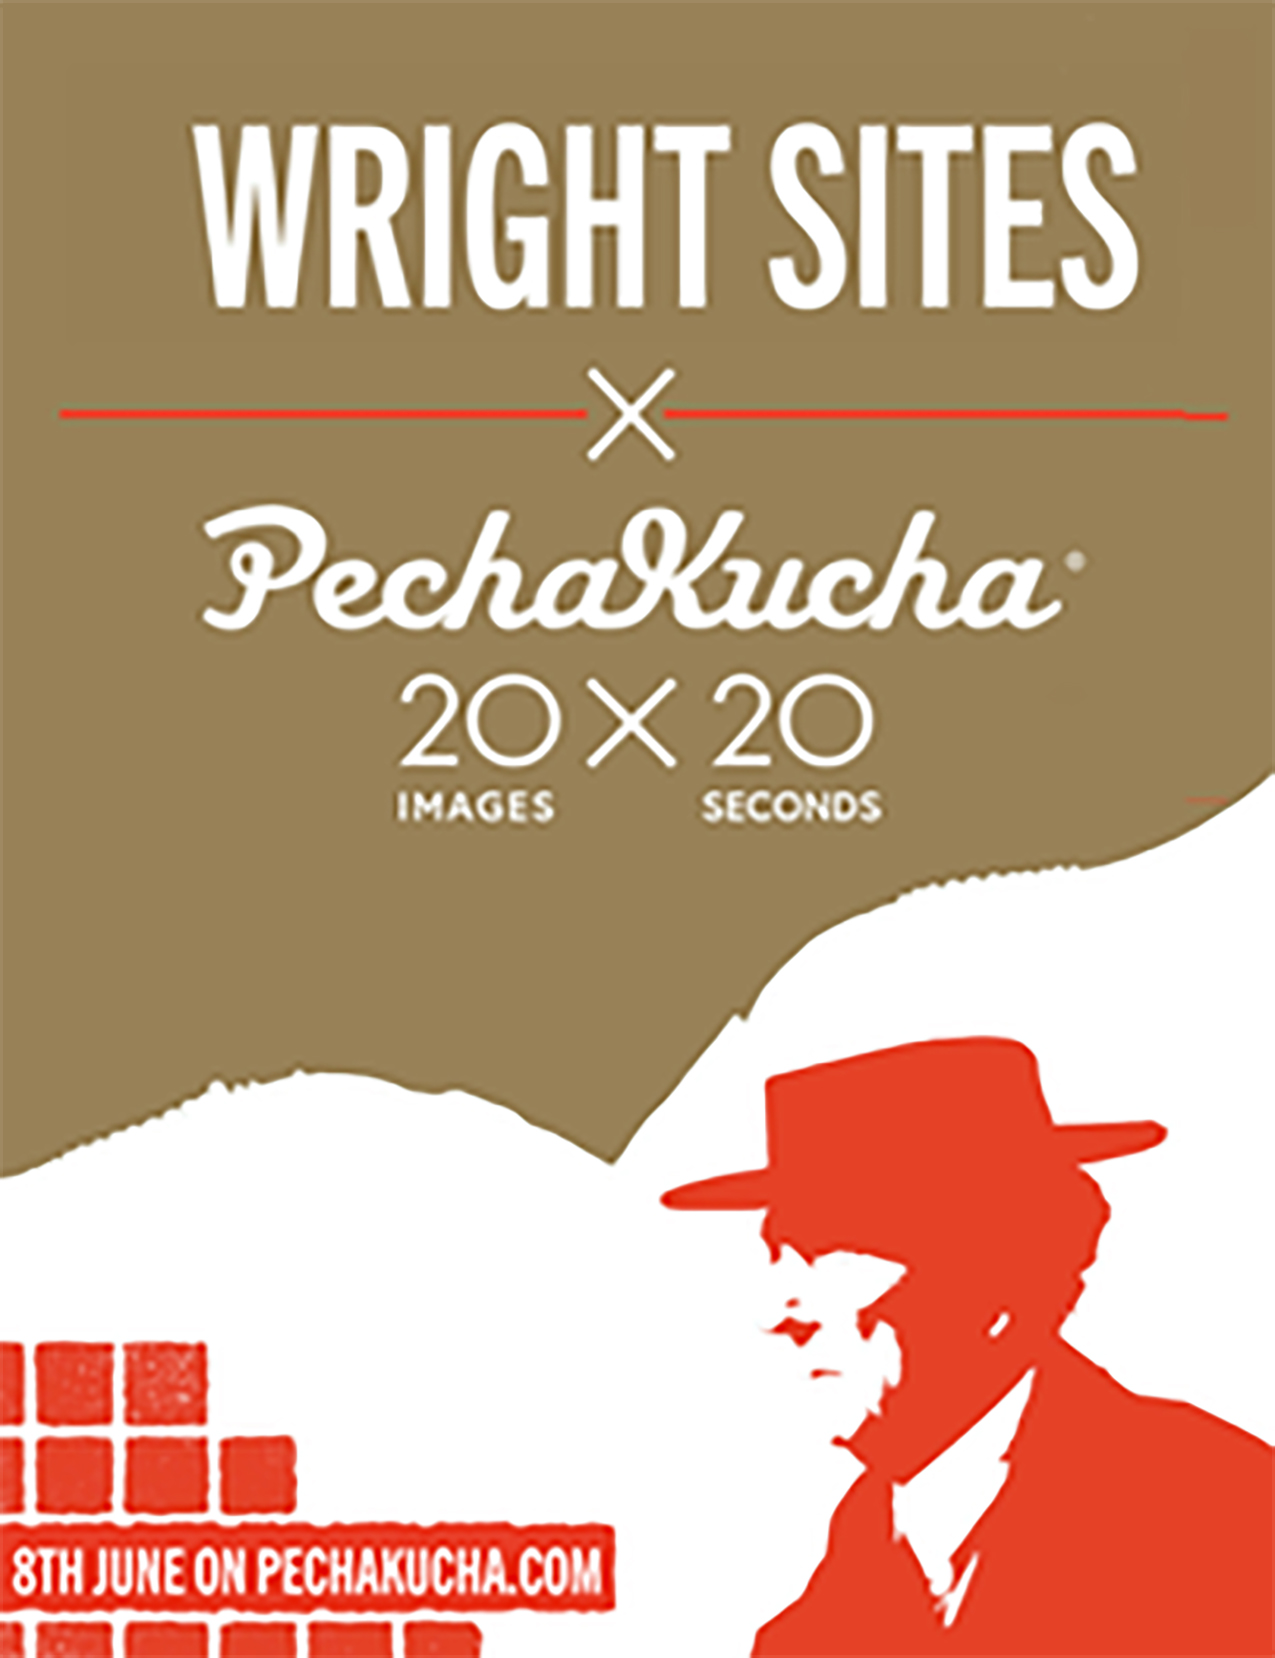 Wright Sites X Pecha Kucha 20 X 20